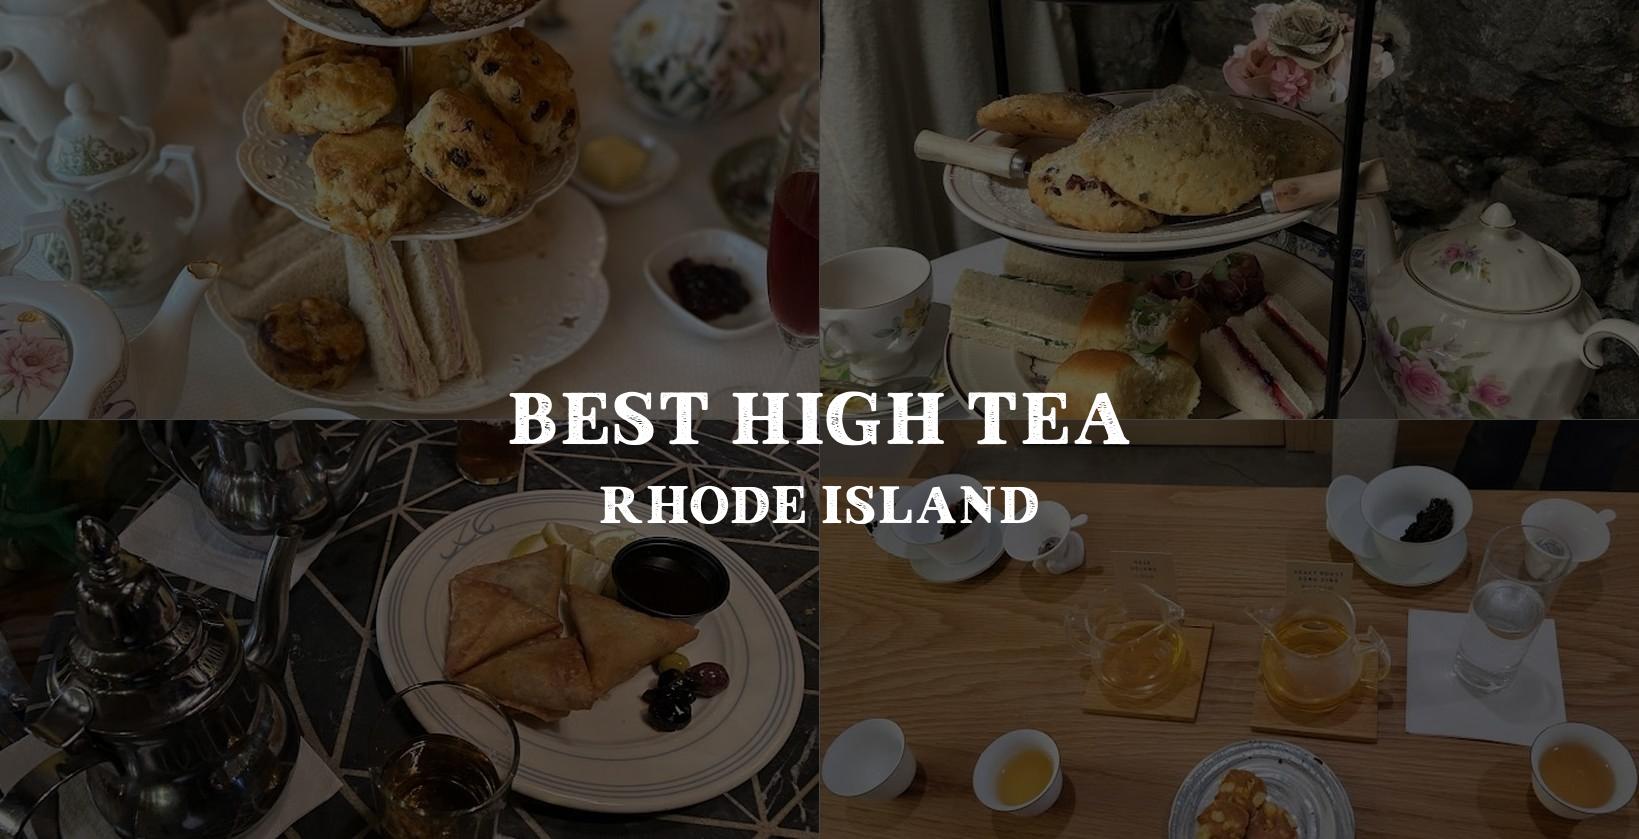 Choosing the right High Tea spot in Rhode Island